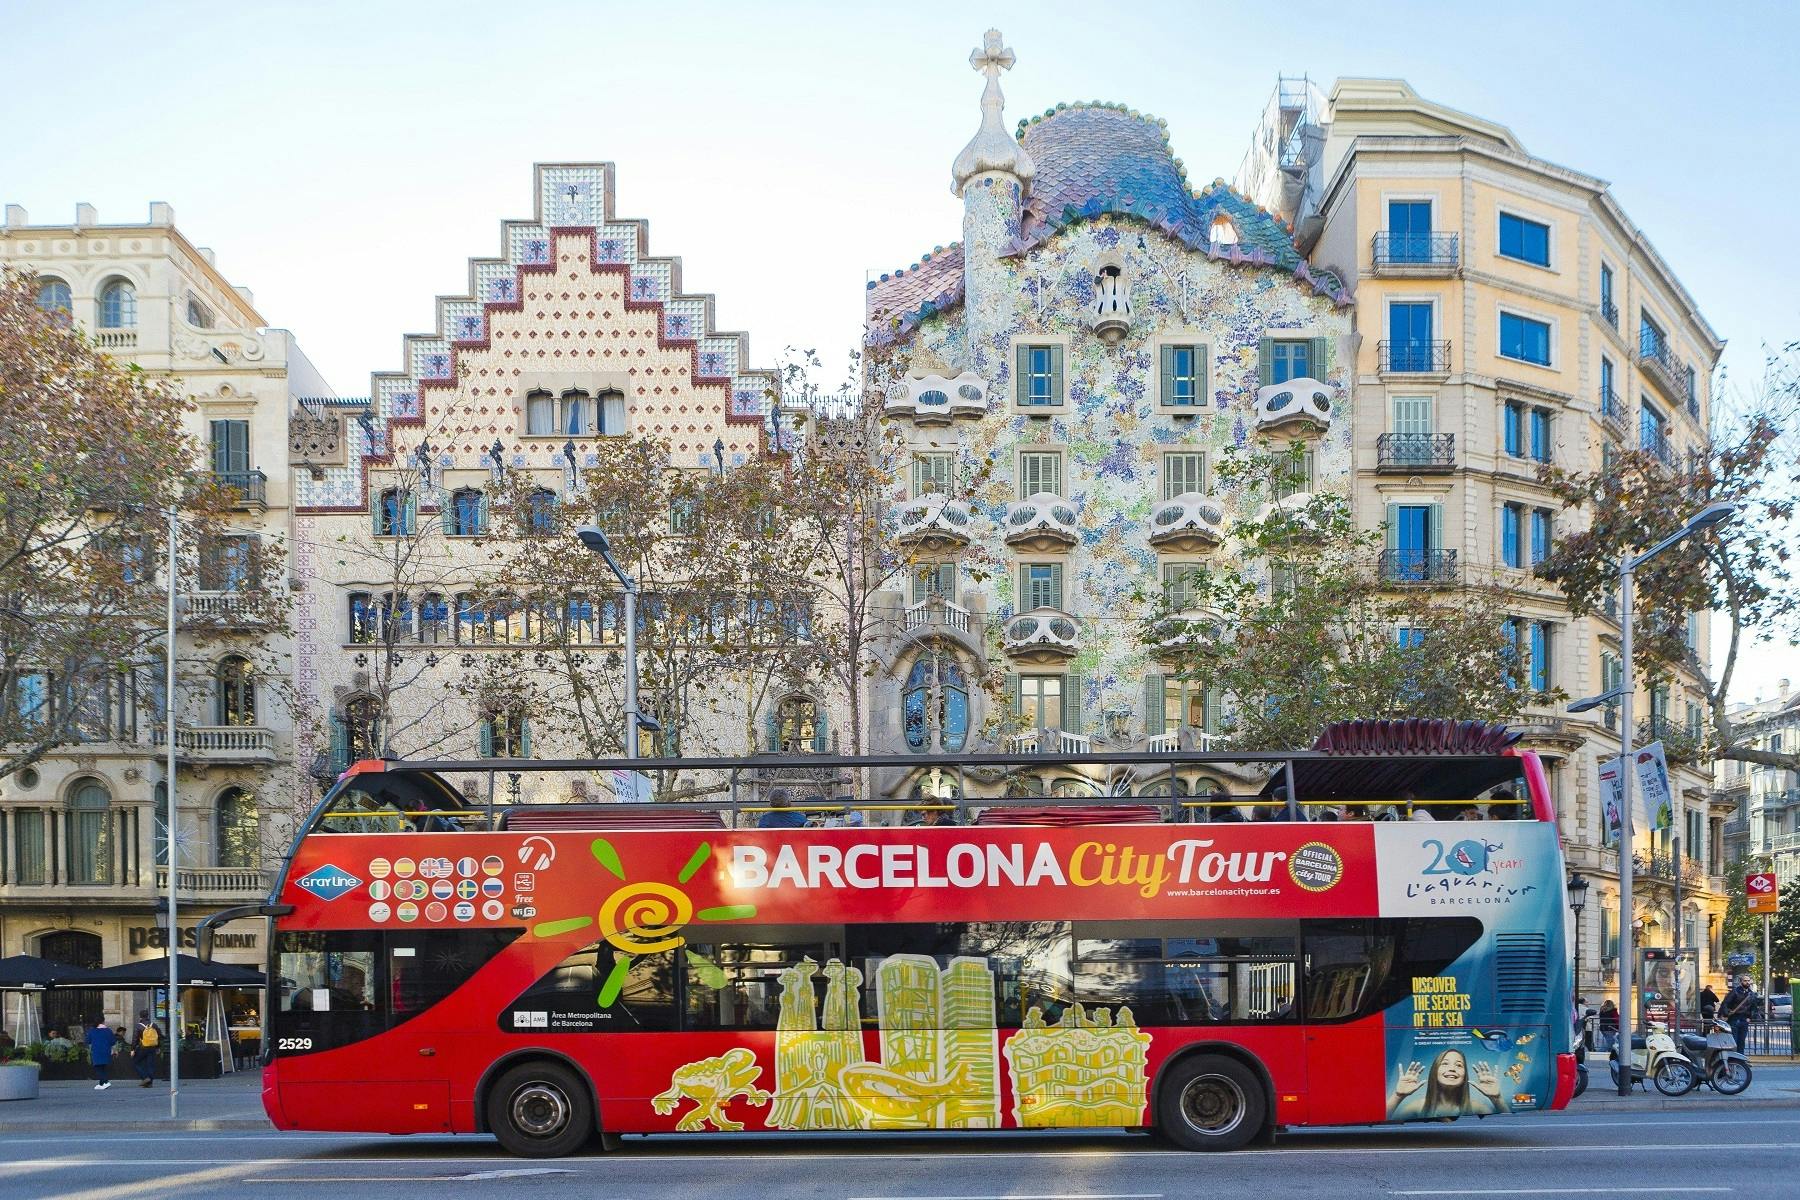 Barcelona city tour hop on off bus tickets Musement